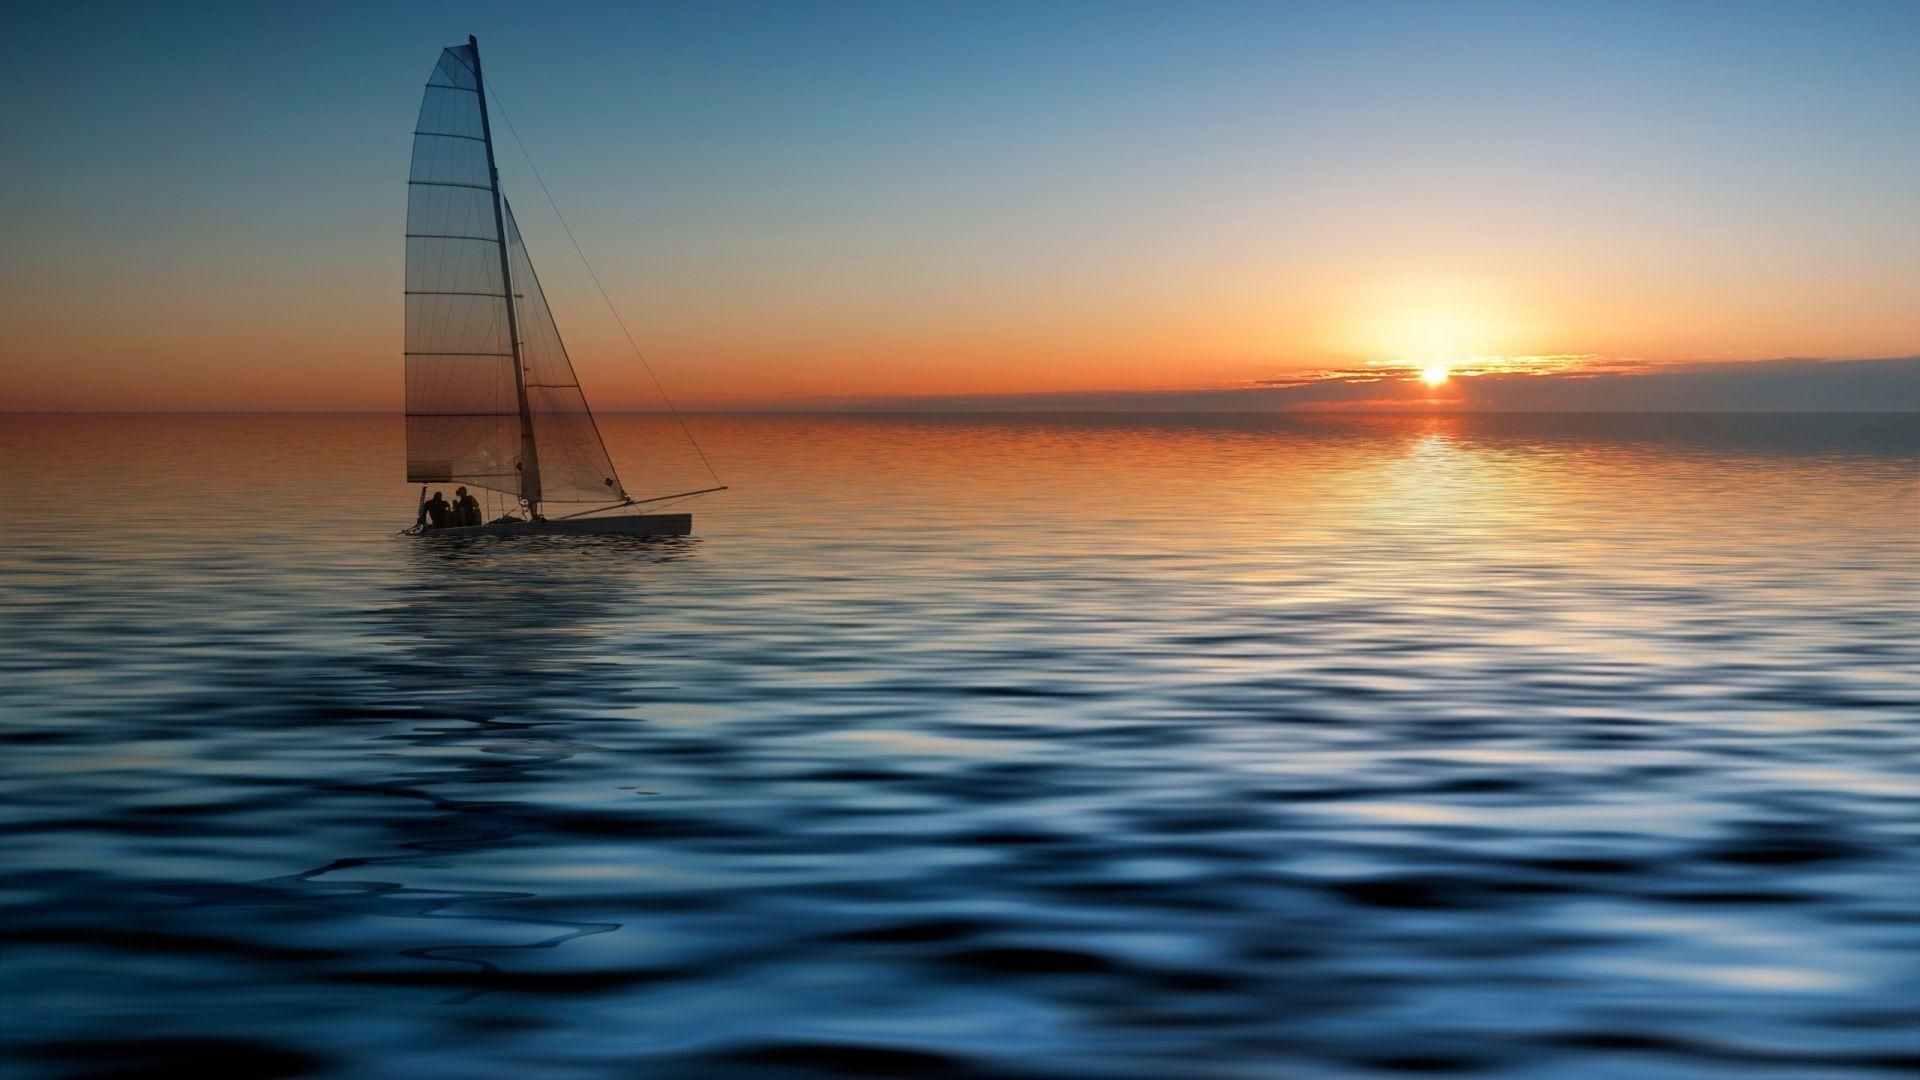 Sailboat Sunset Wallpapers - Top Free Sailboat Sunset Backgrounds